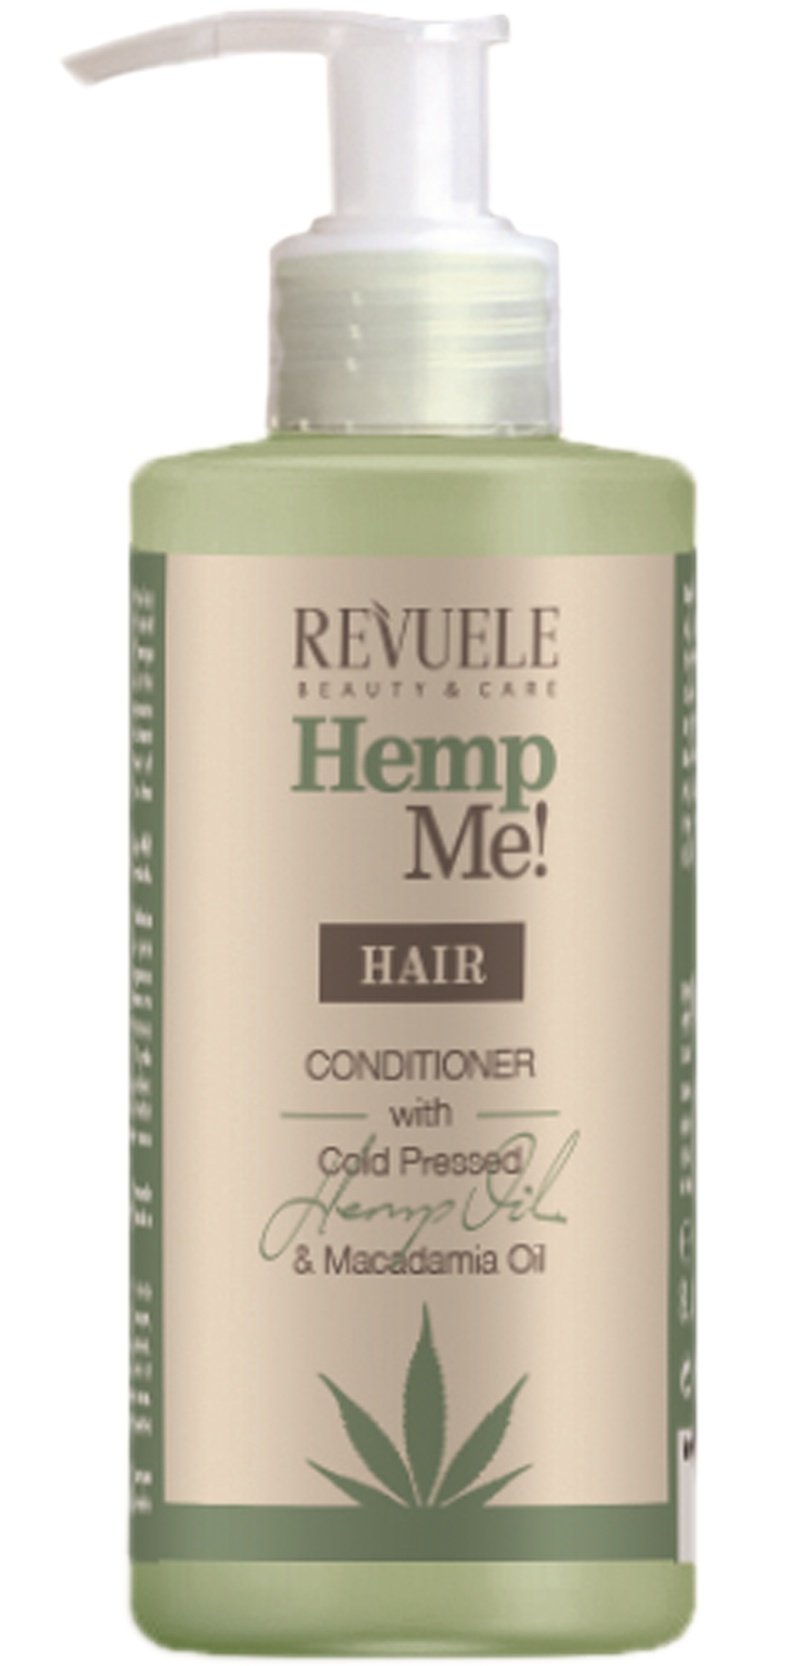 Revuele Hemp Me! Hair Conditioner